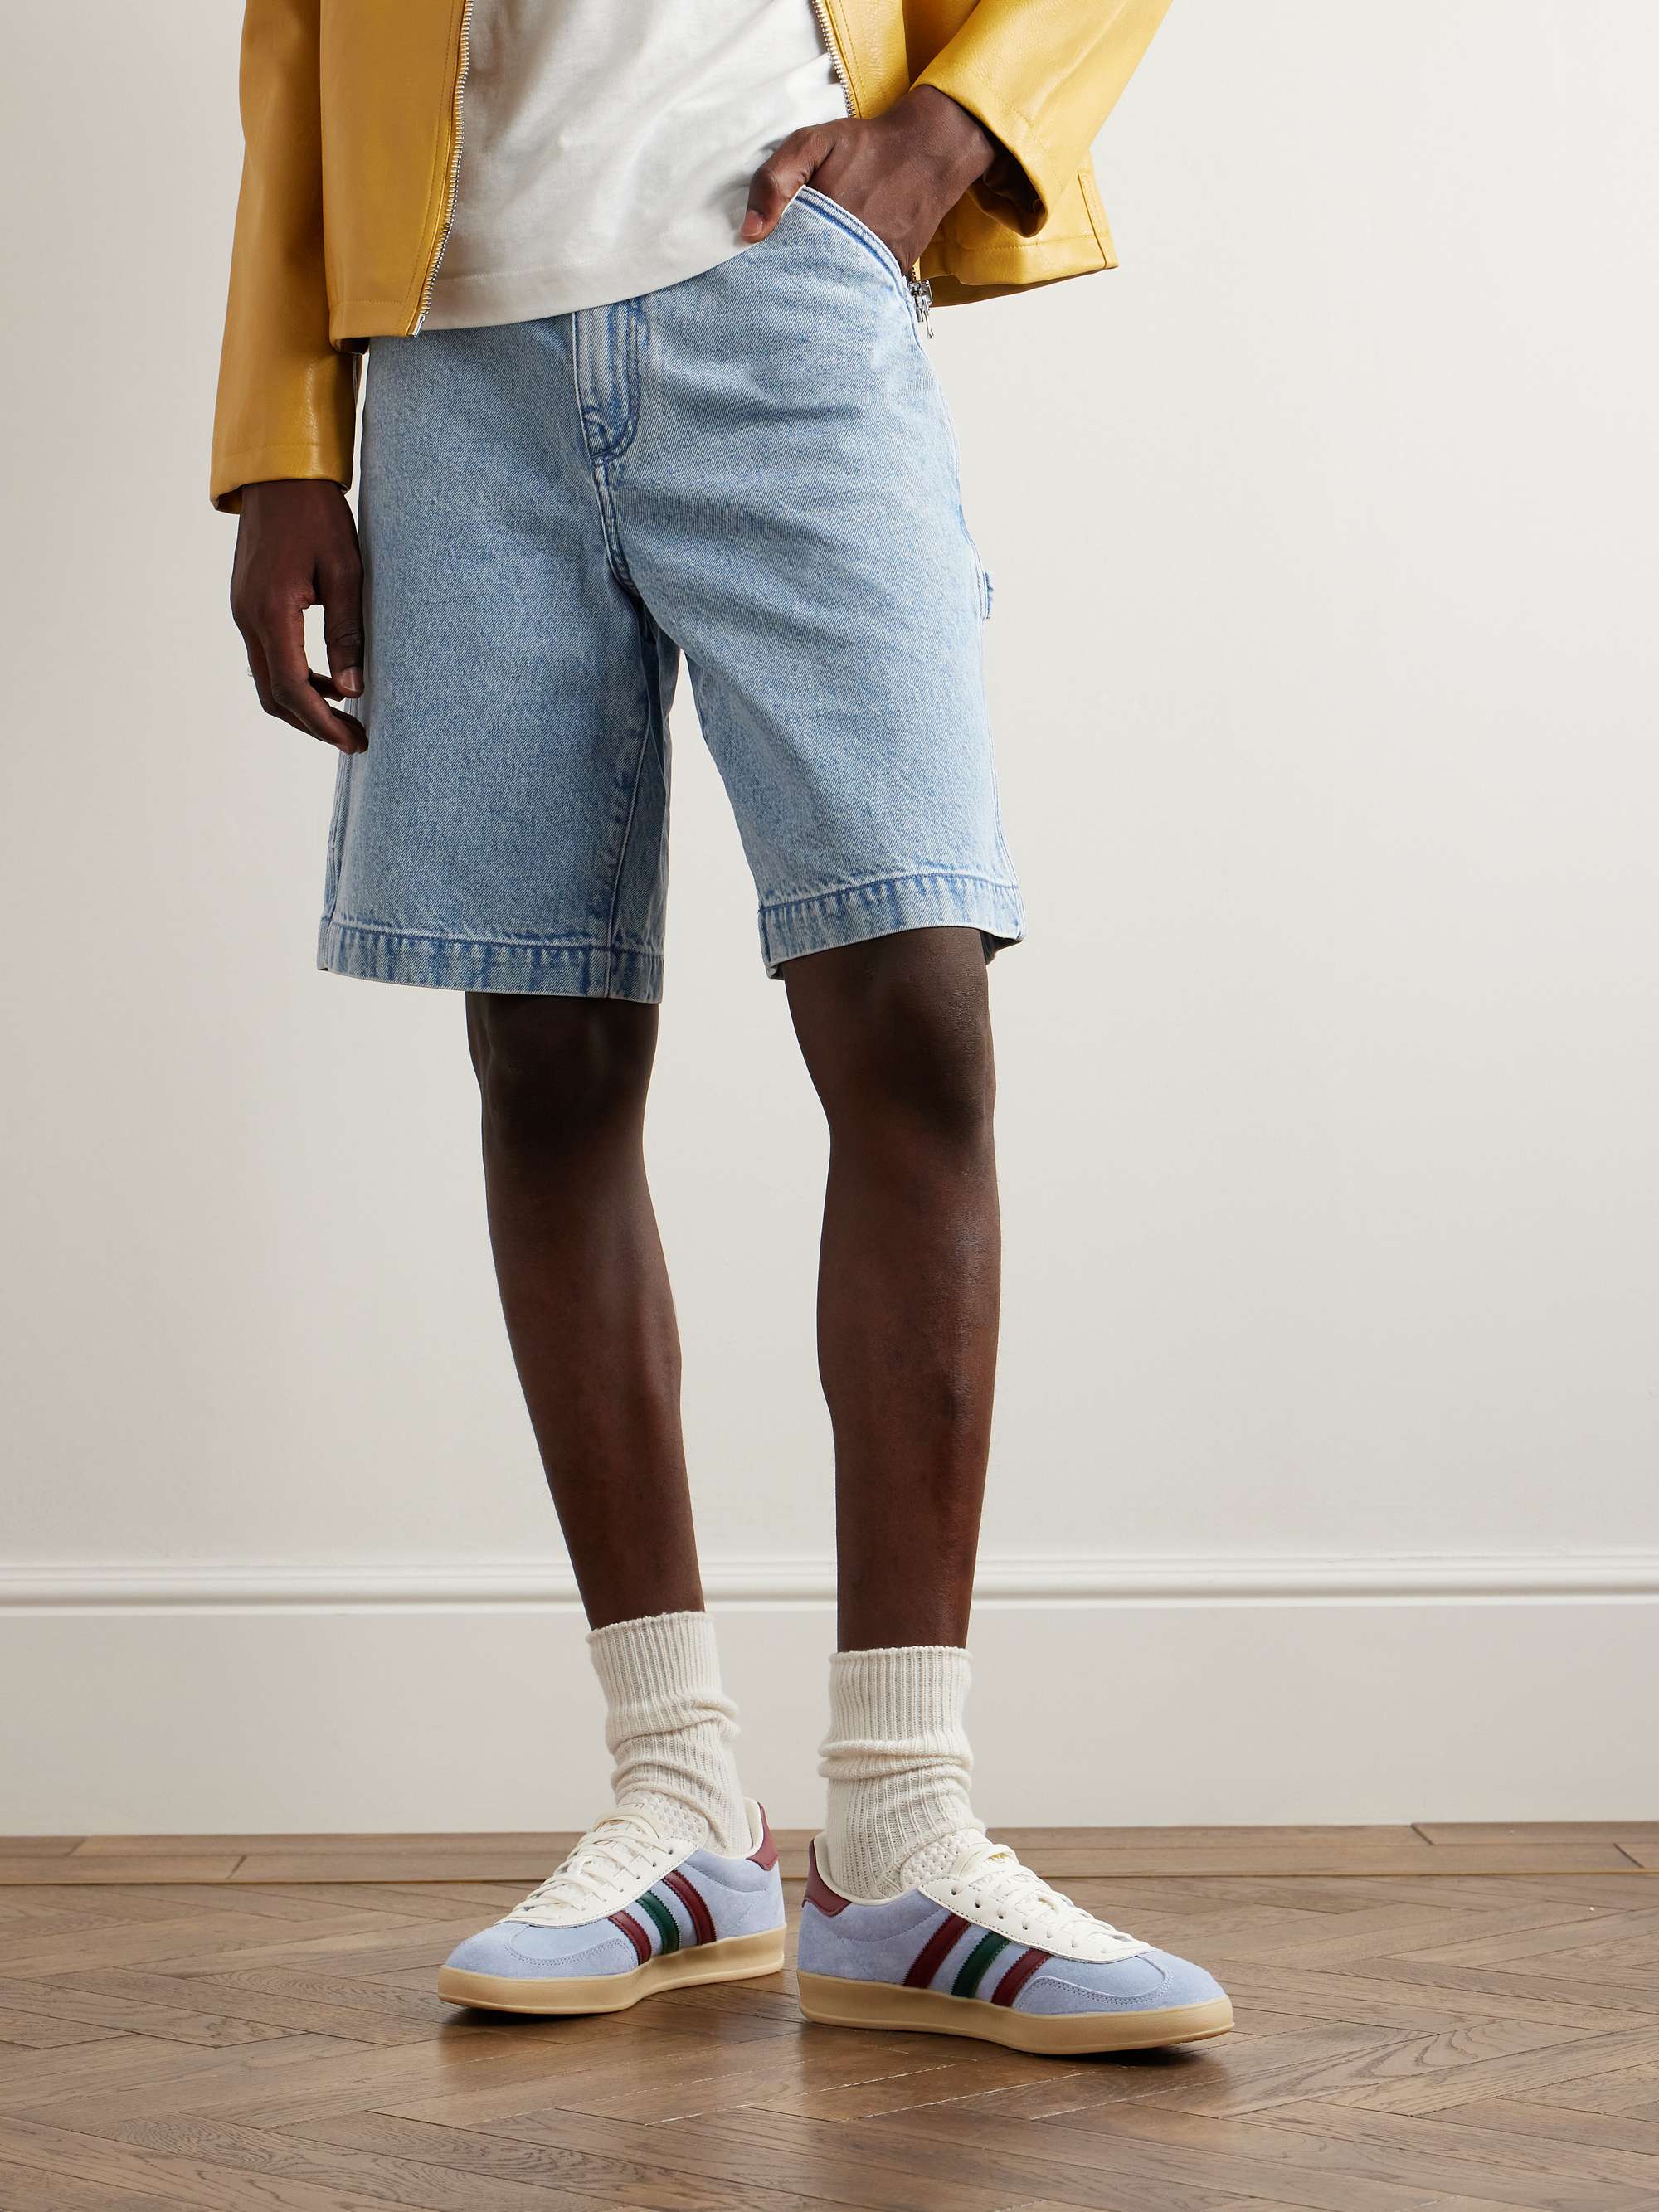 ADIDAS ORIGINALS Gazelle Leather-Trimmed Suede Sneakers for Men | MR PORTER